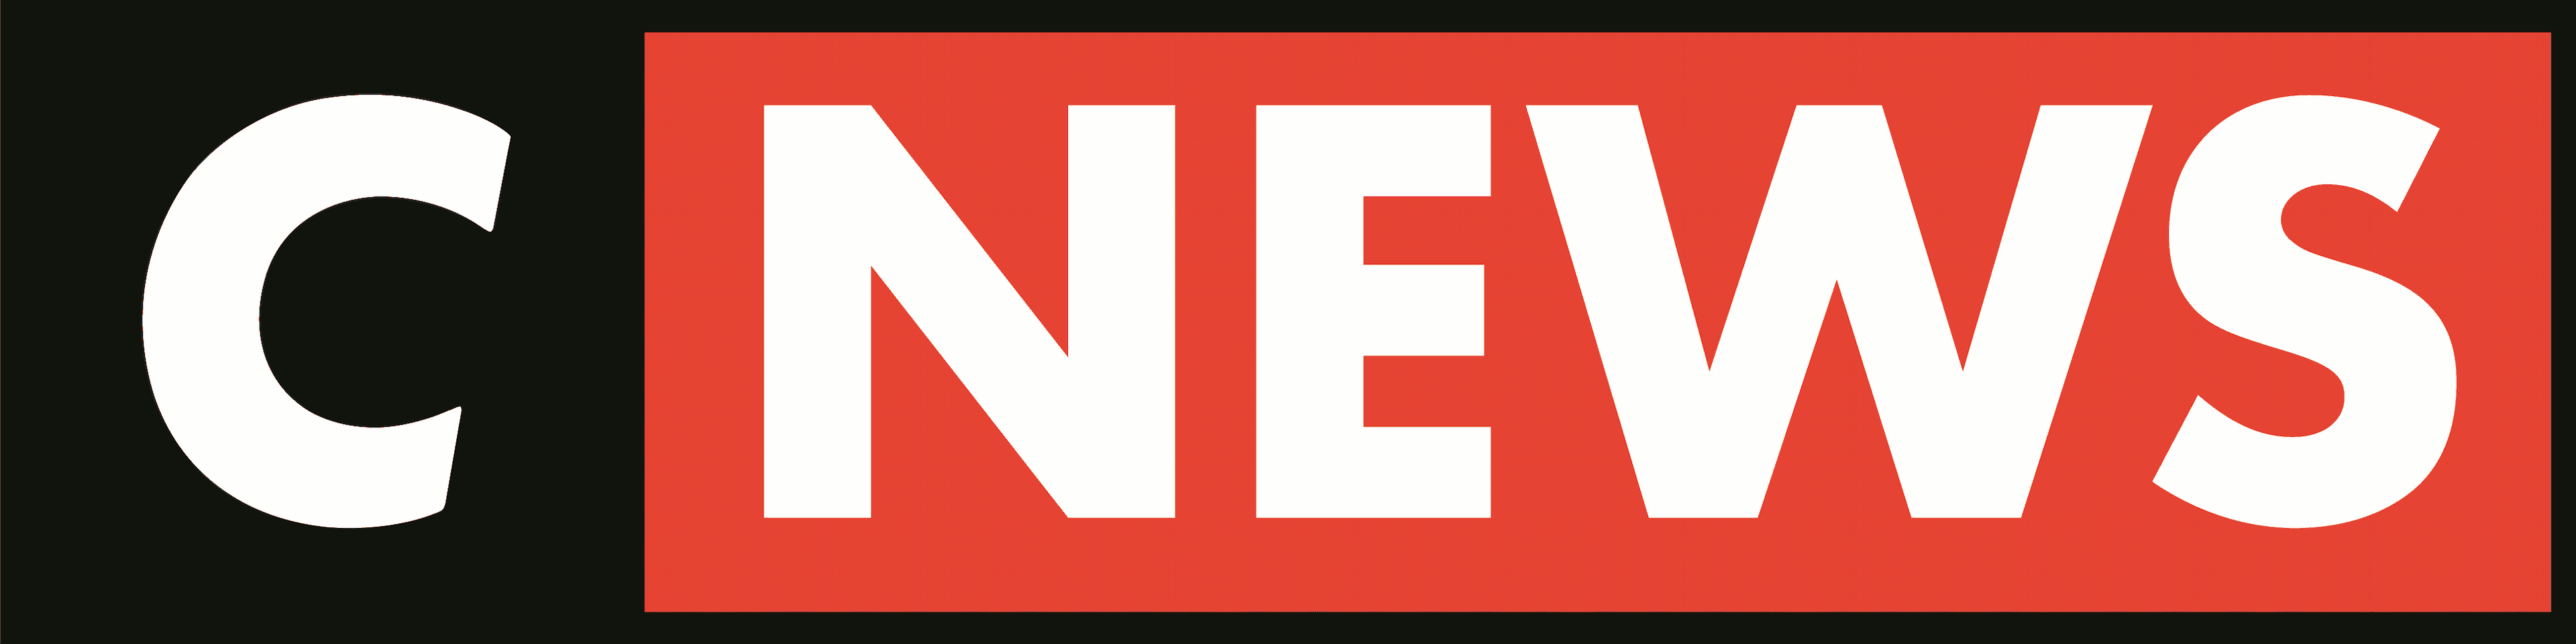 CNews-logo.png